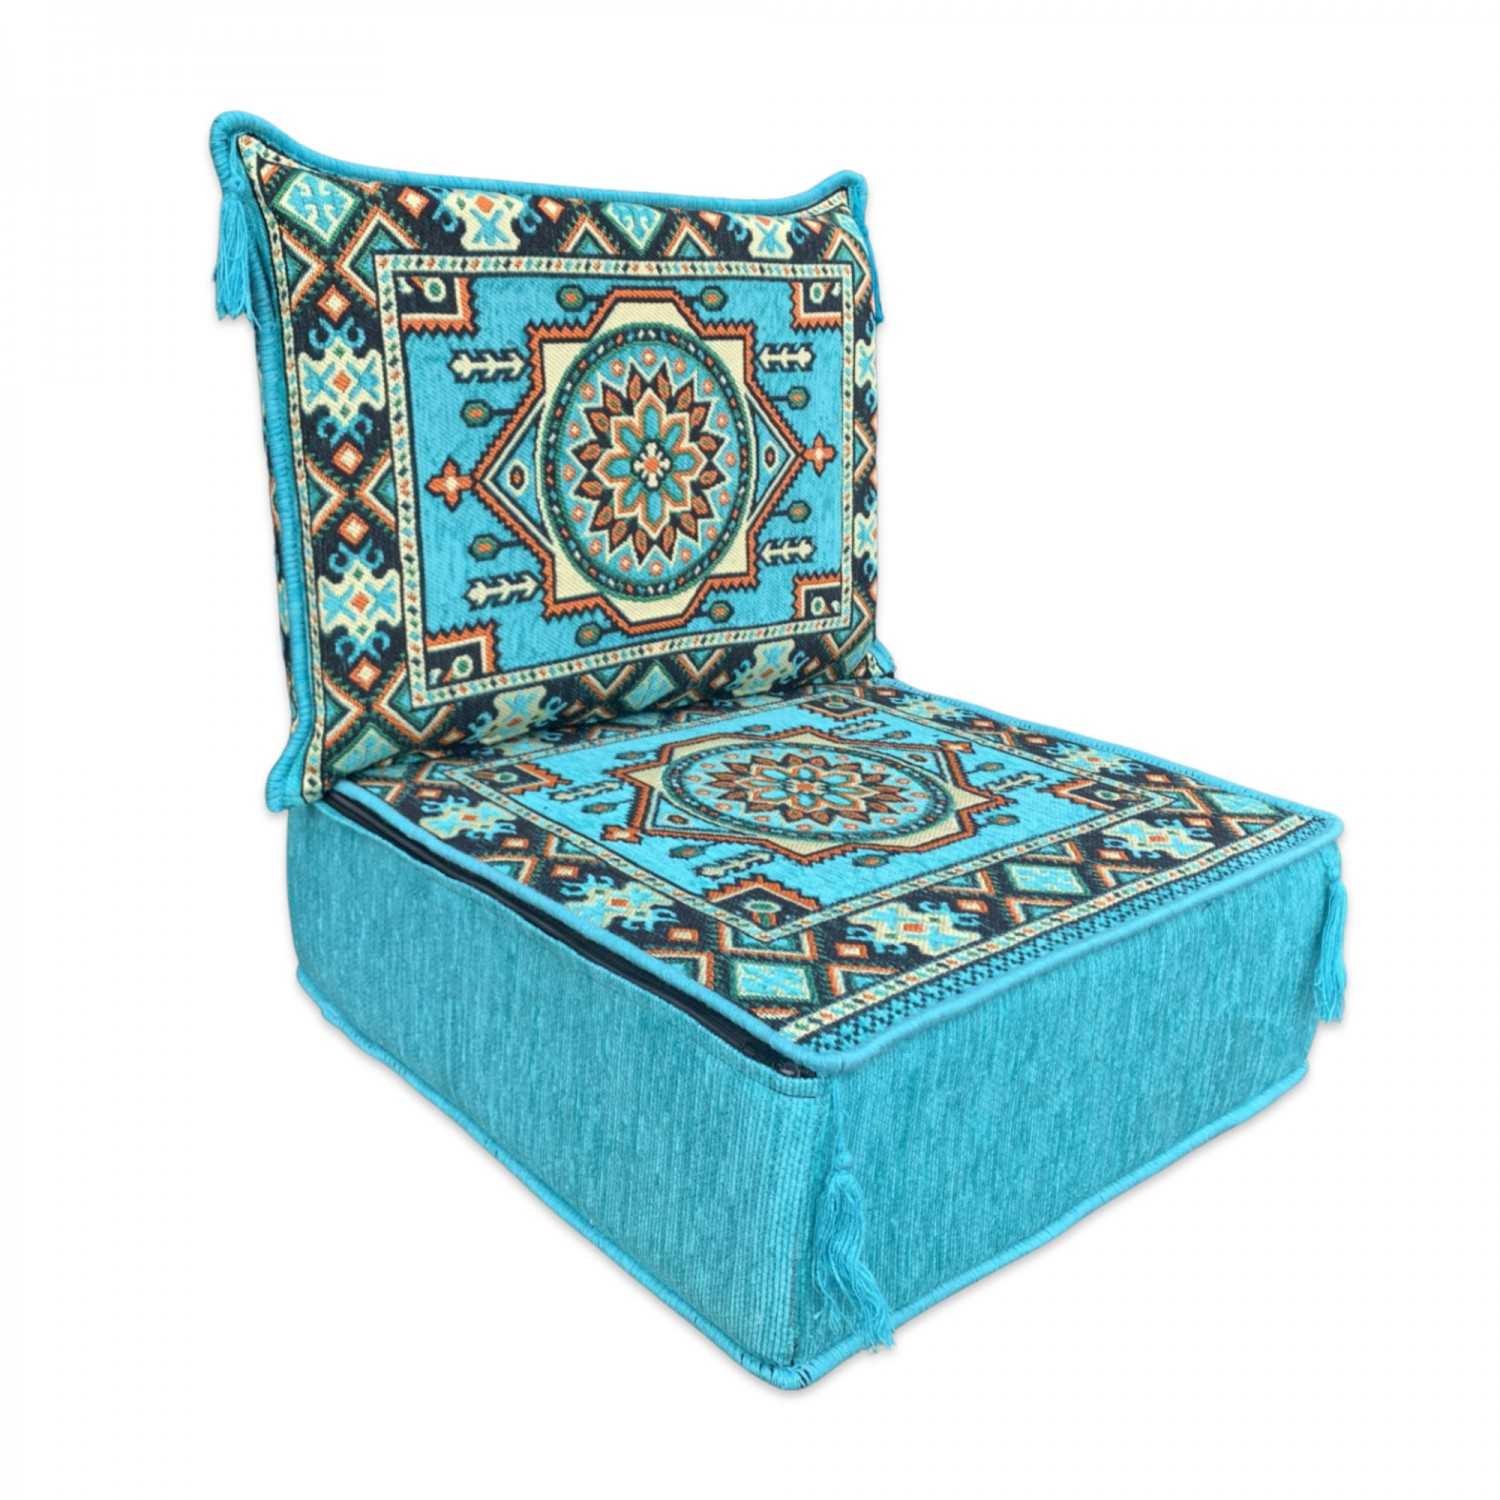 https://www.spirithomeinteriors.com/6567-home_default/atlantis-modular-floor-cushions-ottoman.jpg